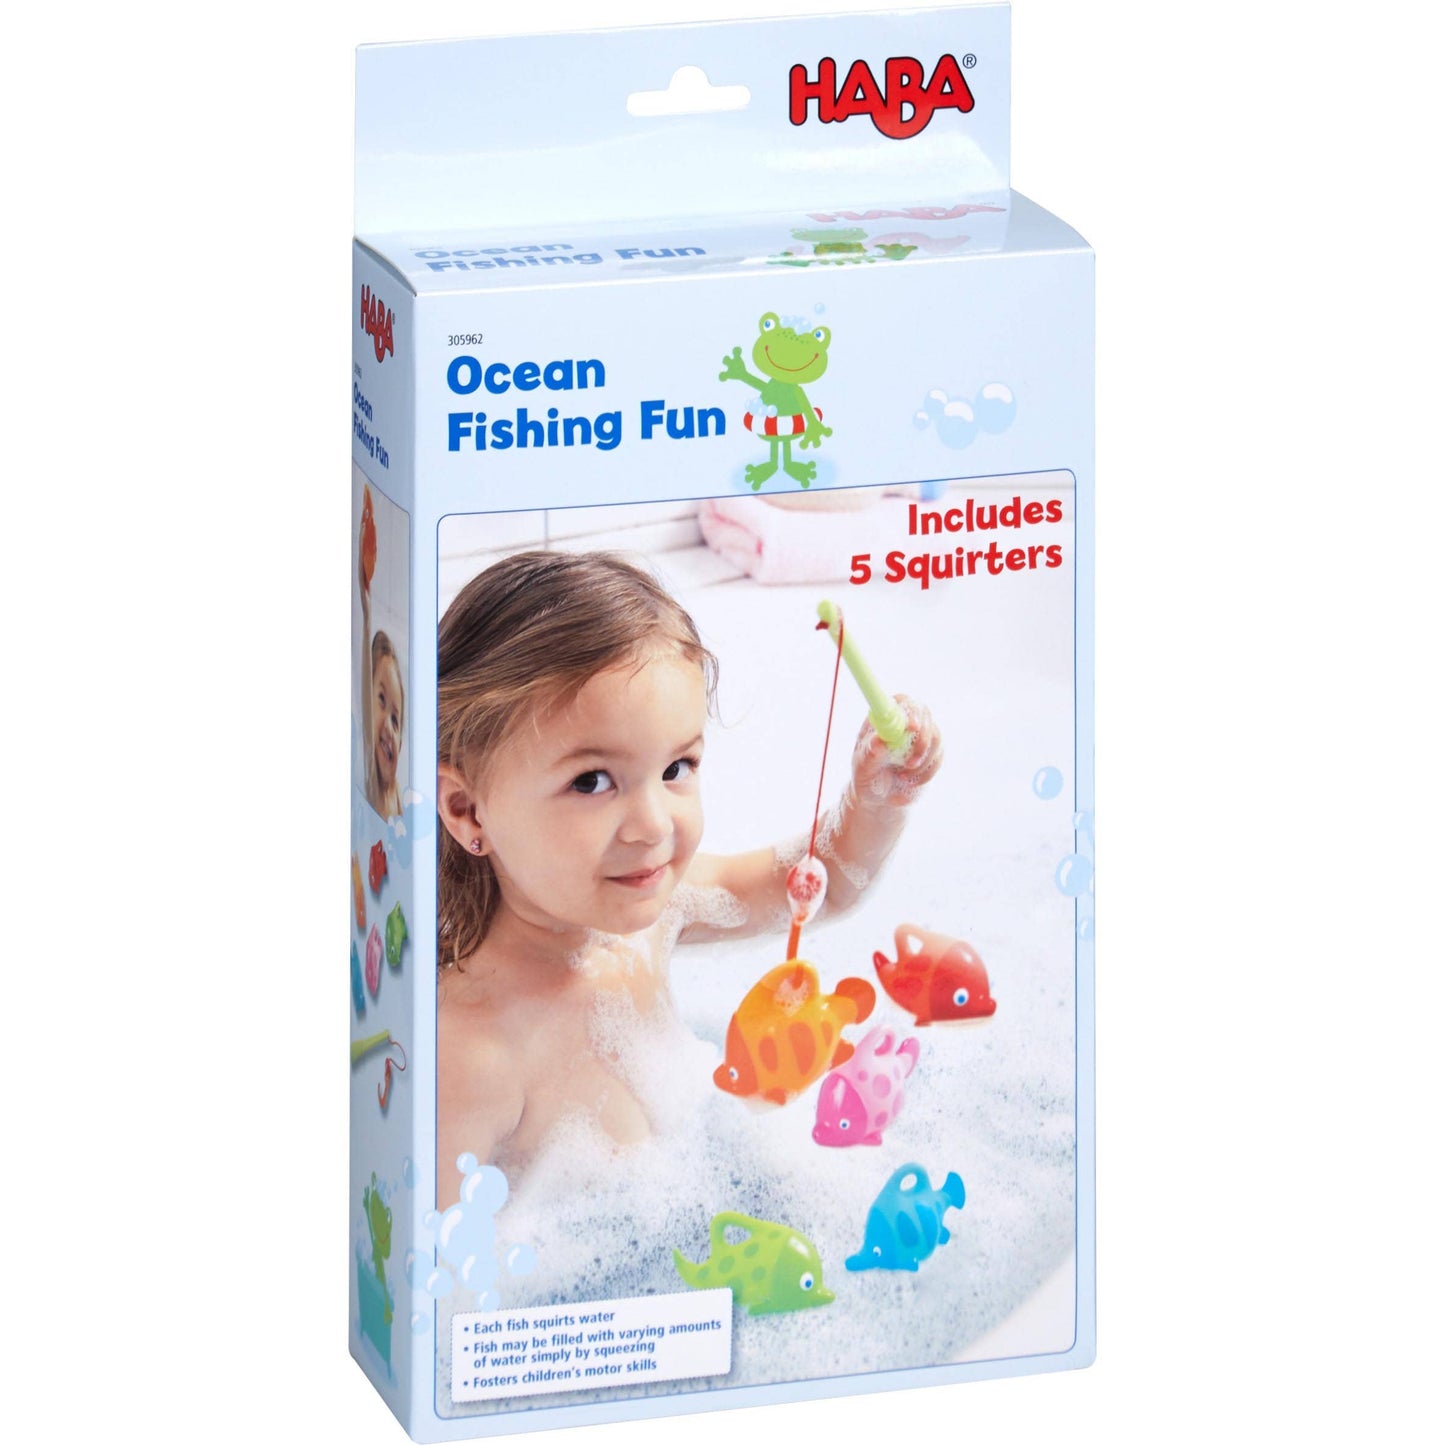 Ocean Fishing Fun Bath Toy